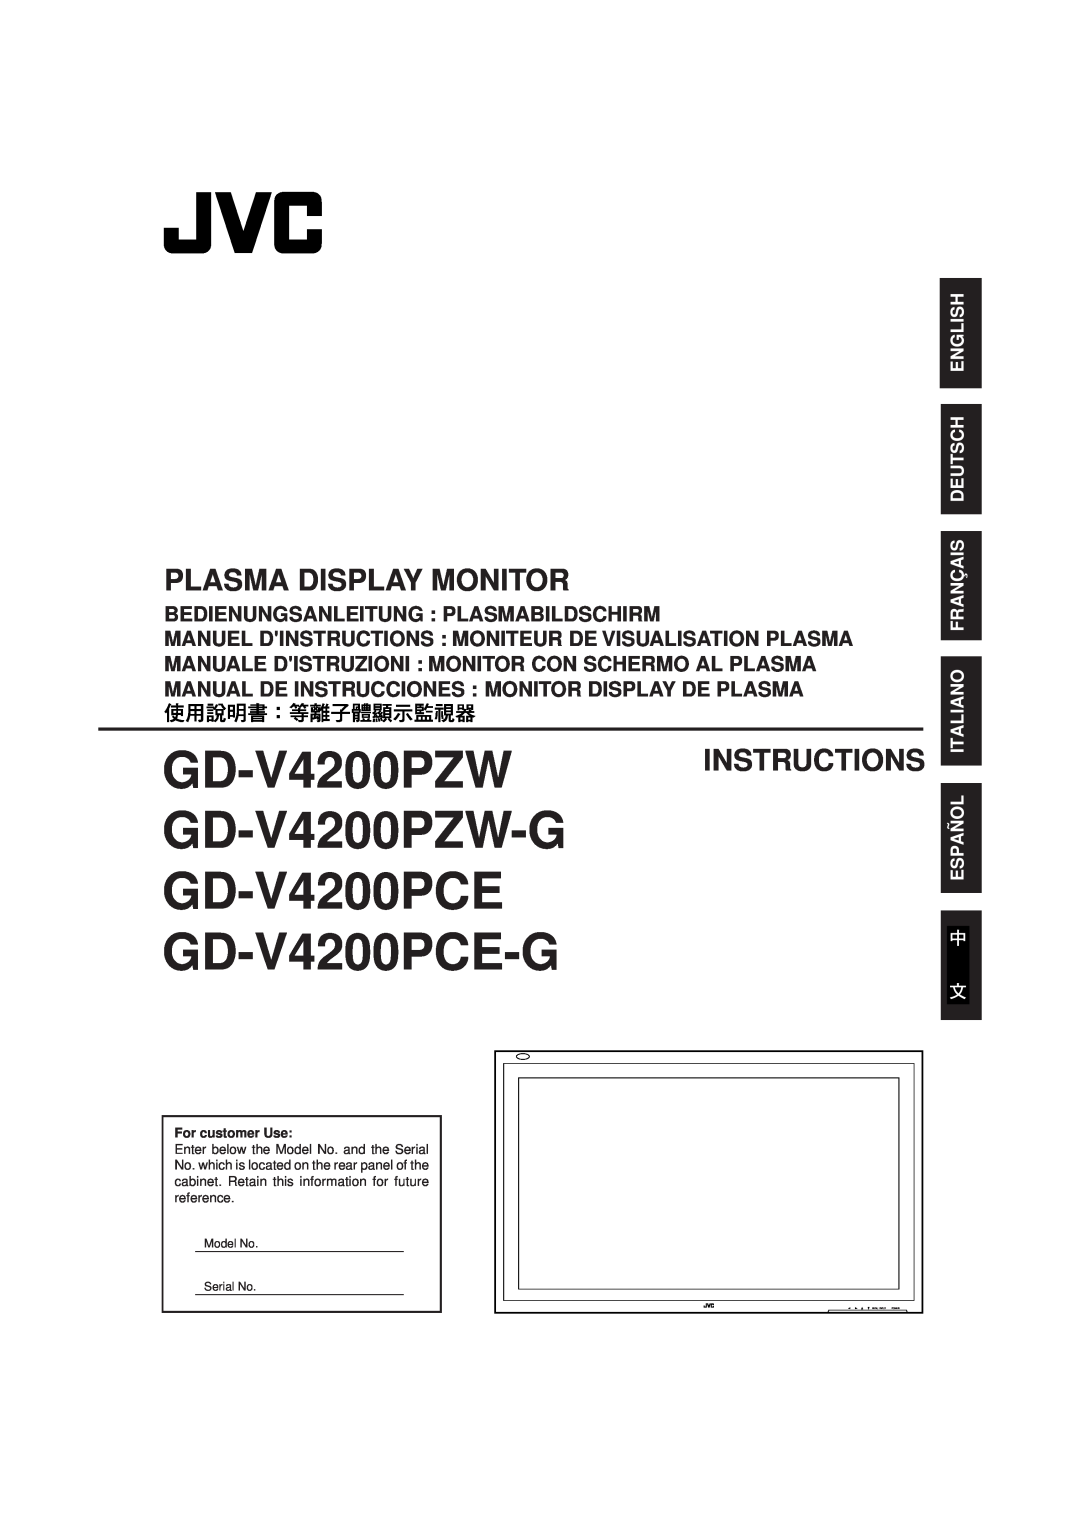 JVC Model No Serial No, GD-V4200PZW INSTRUCTIONS GD-V4200PZW-G GD-V4200PCE GD-V4200PCE-G, Plasma Display Monitor, Power 